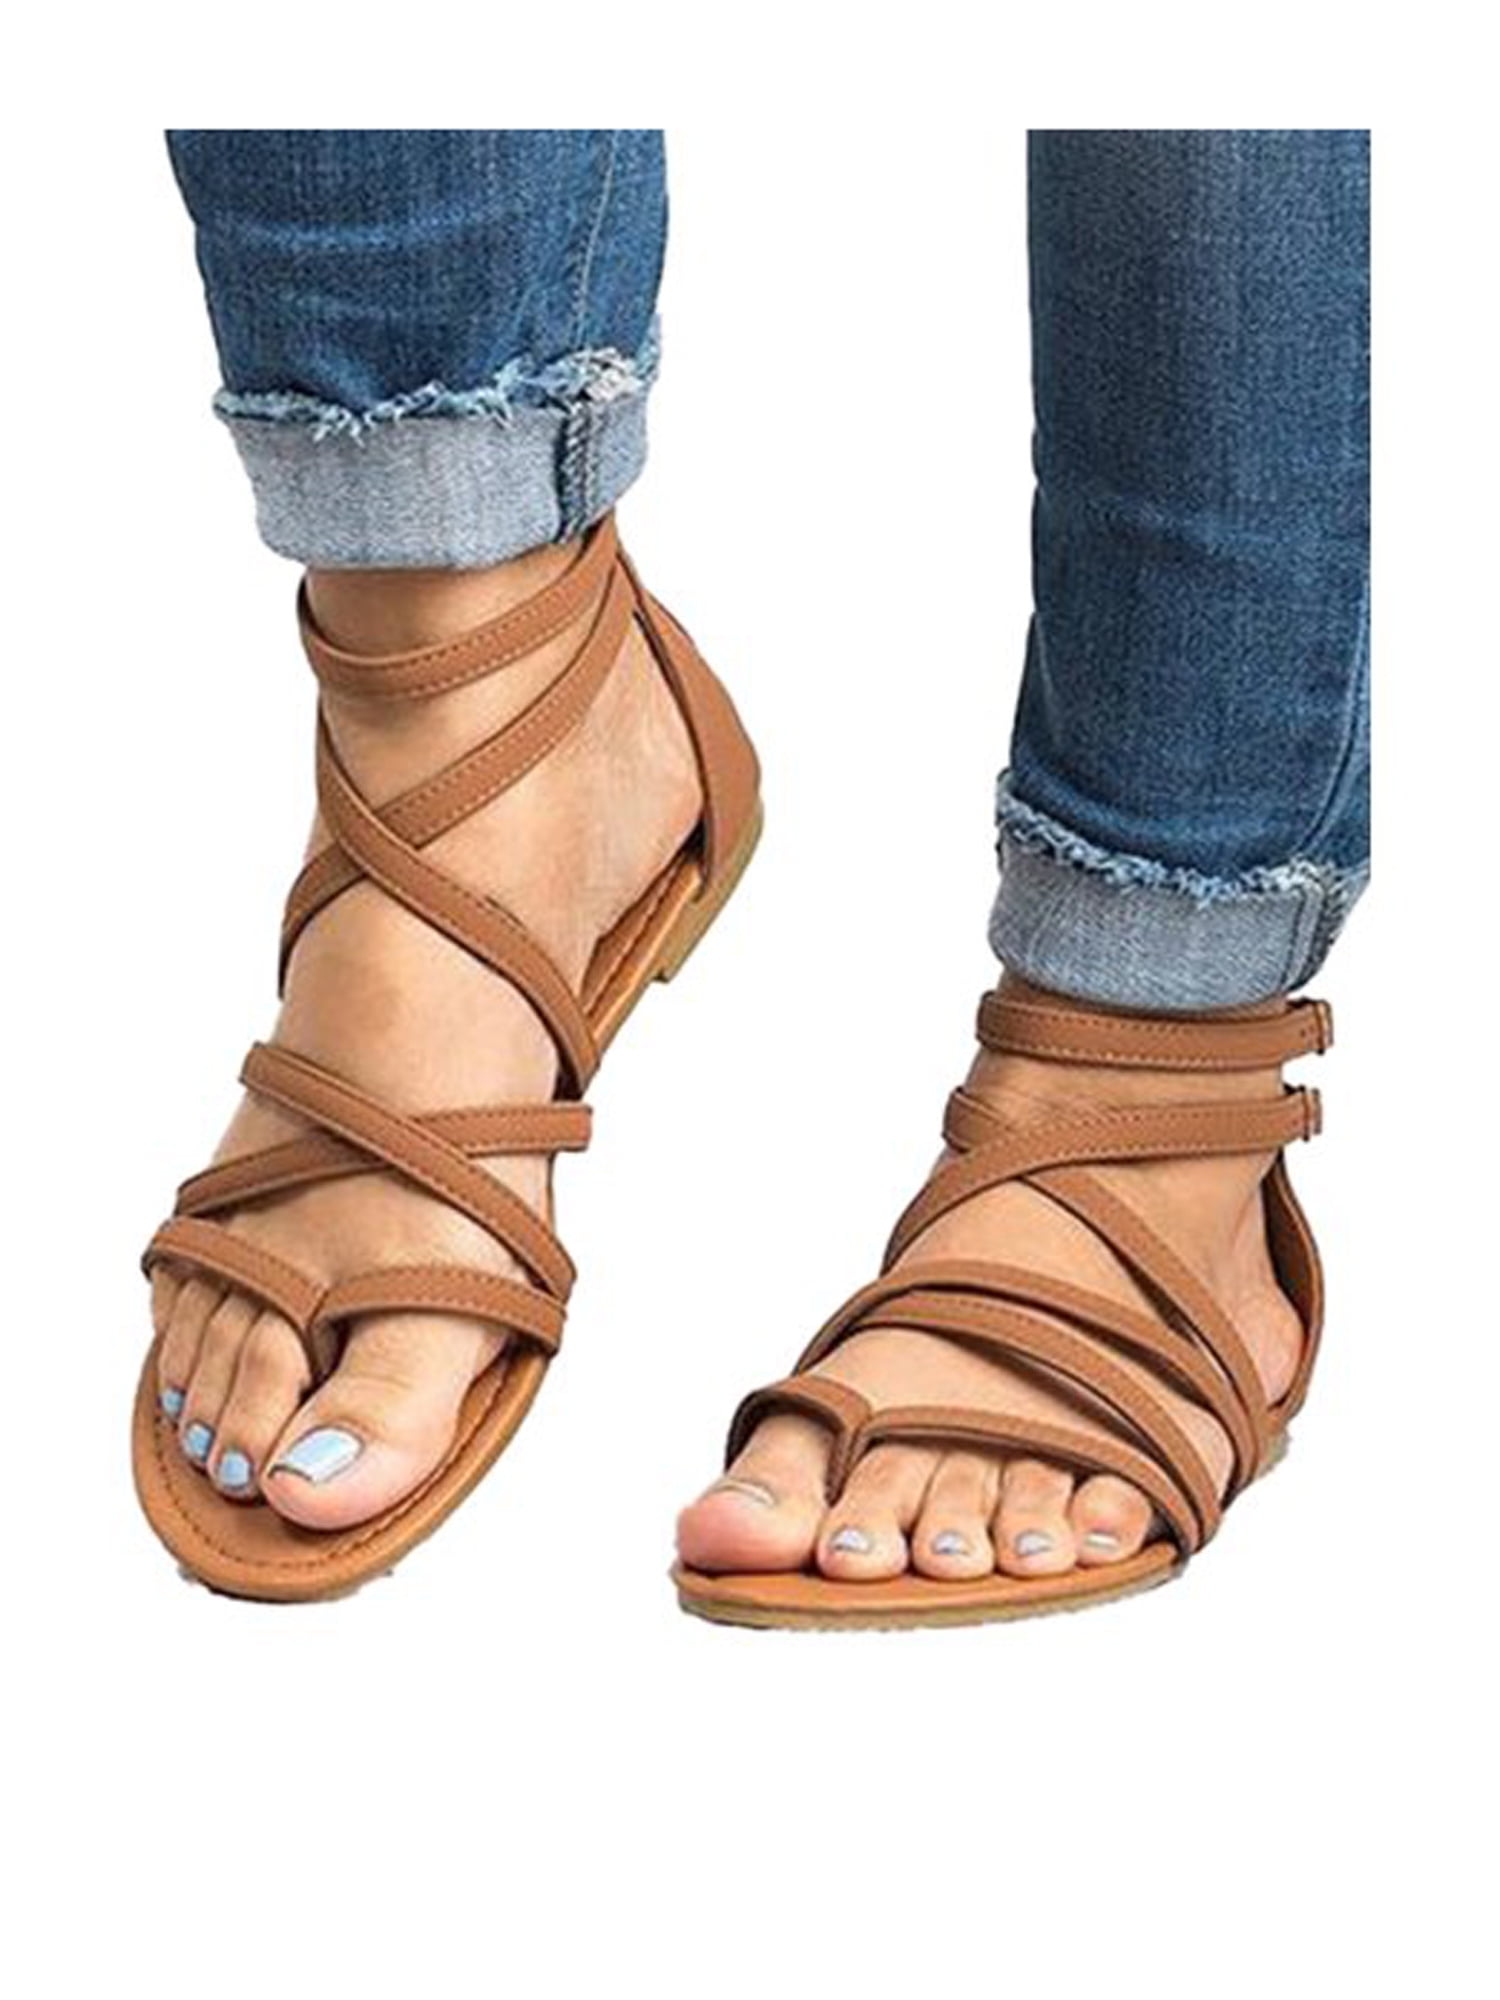 Desirepath Women Teens Summer Flat Gladiator Sandals Comfortable Beach Shoes